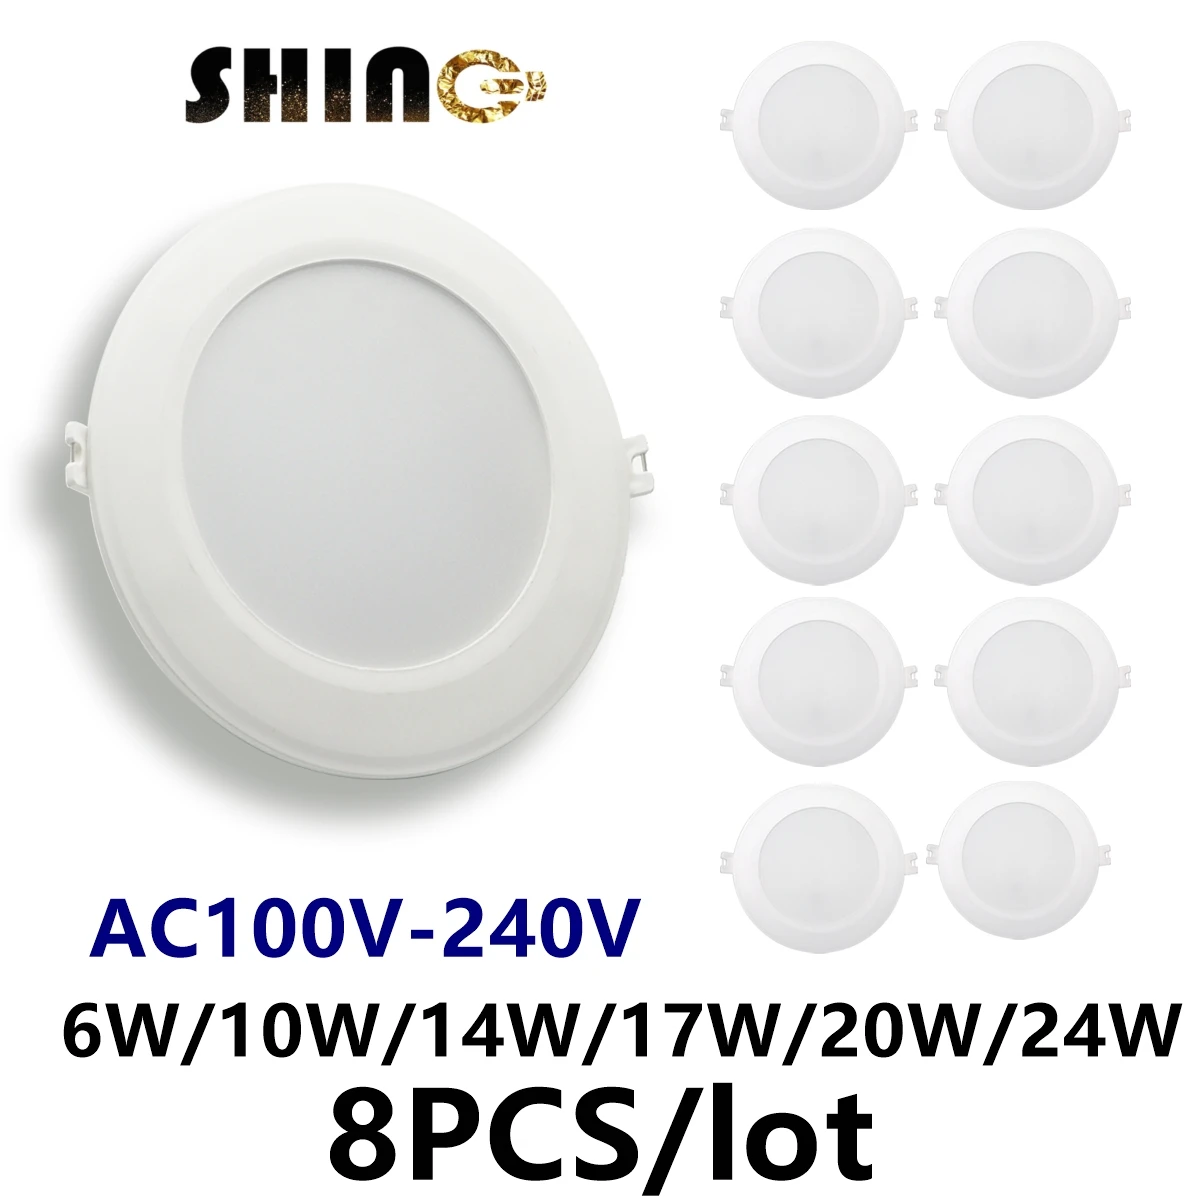 8PCS LED dark down light sky lamp AC100V-240V 6W-24W super bright warm white light suitable for kitchen study